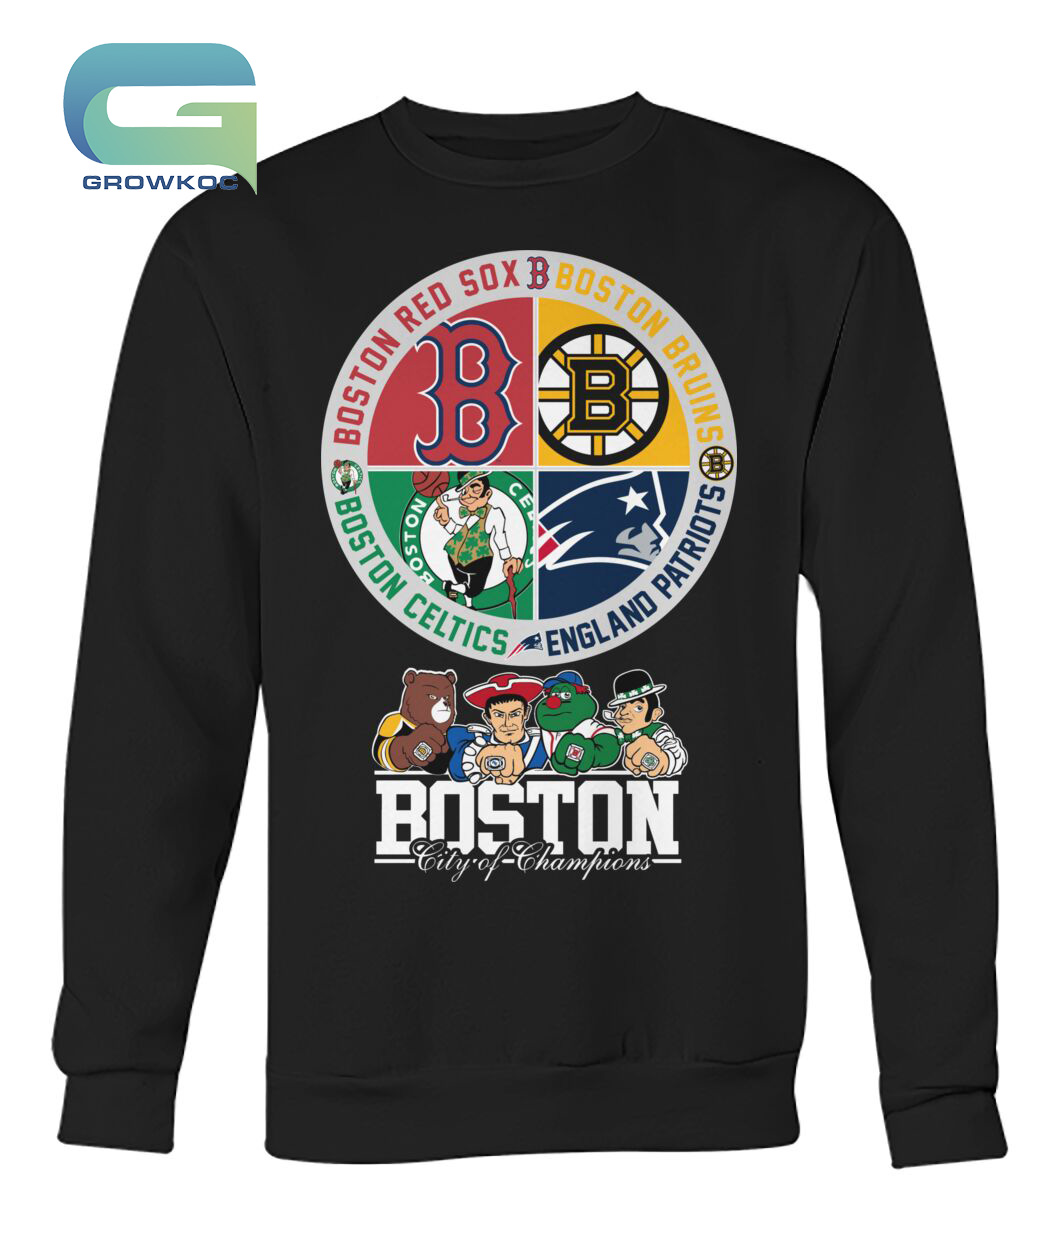 Boston City Of Champions Patriot Red Sox Celtics And Bruins Shirt